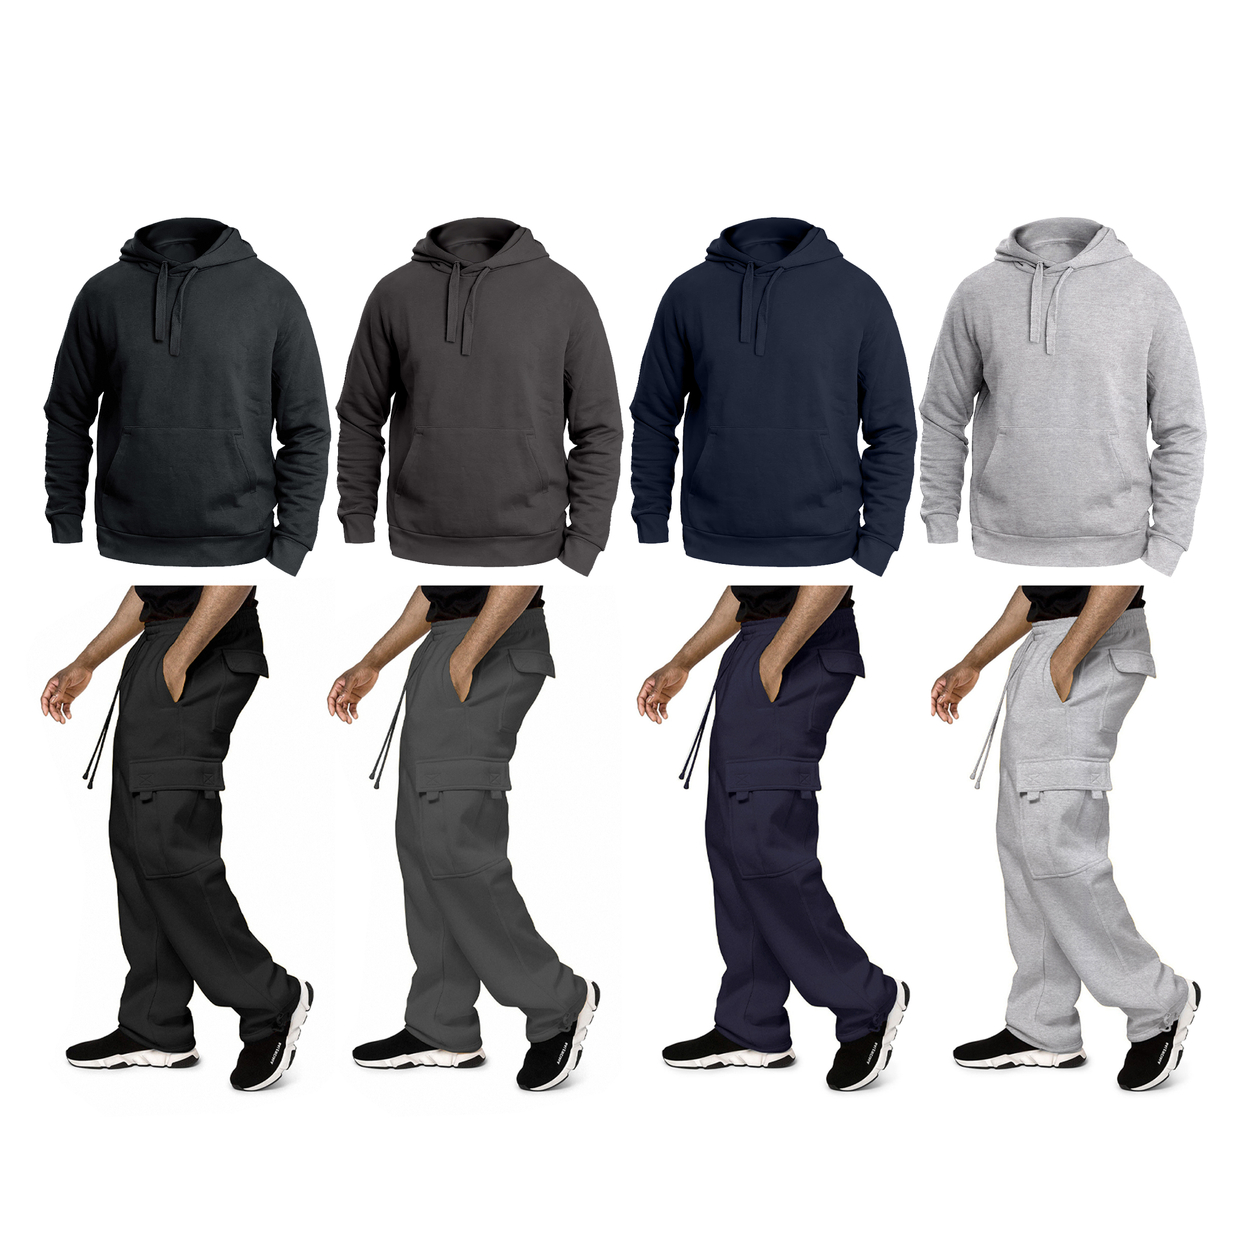 Multi-Pack: Big & Tall Men's Winter Warm Cozy Athletic Fleece Lined Multi-Pocket Cargo Sweatsuit - Charcoal, 1-pack, Medium